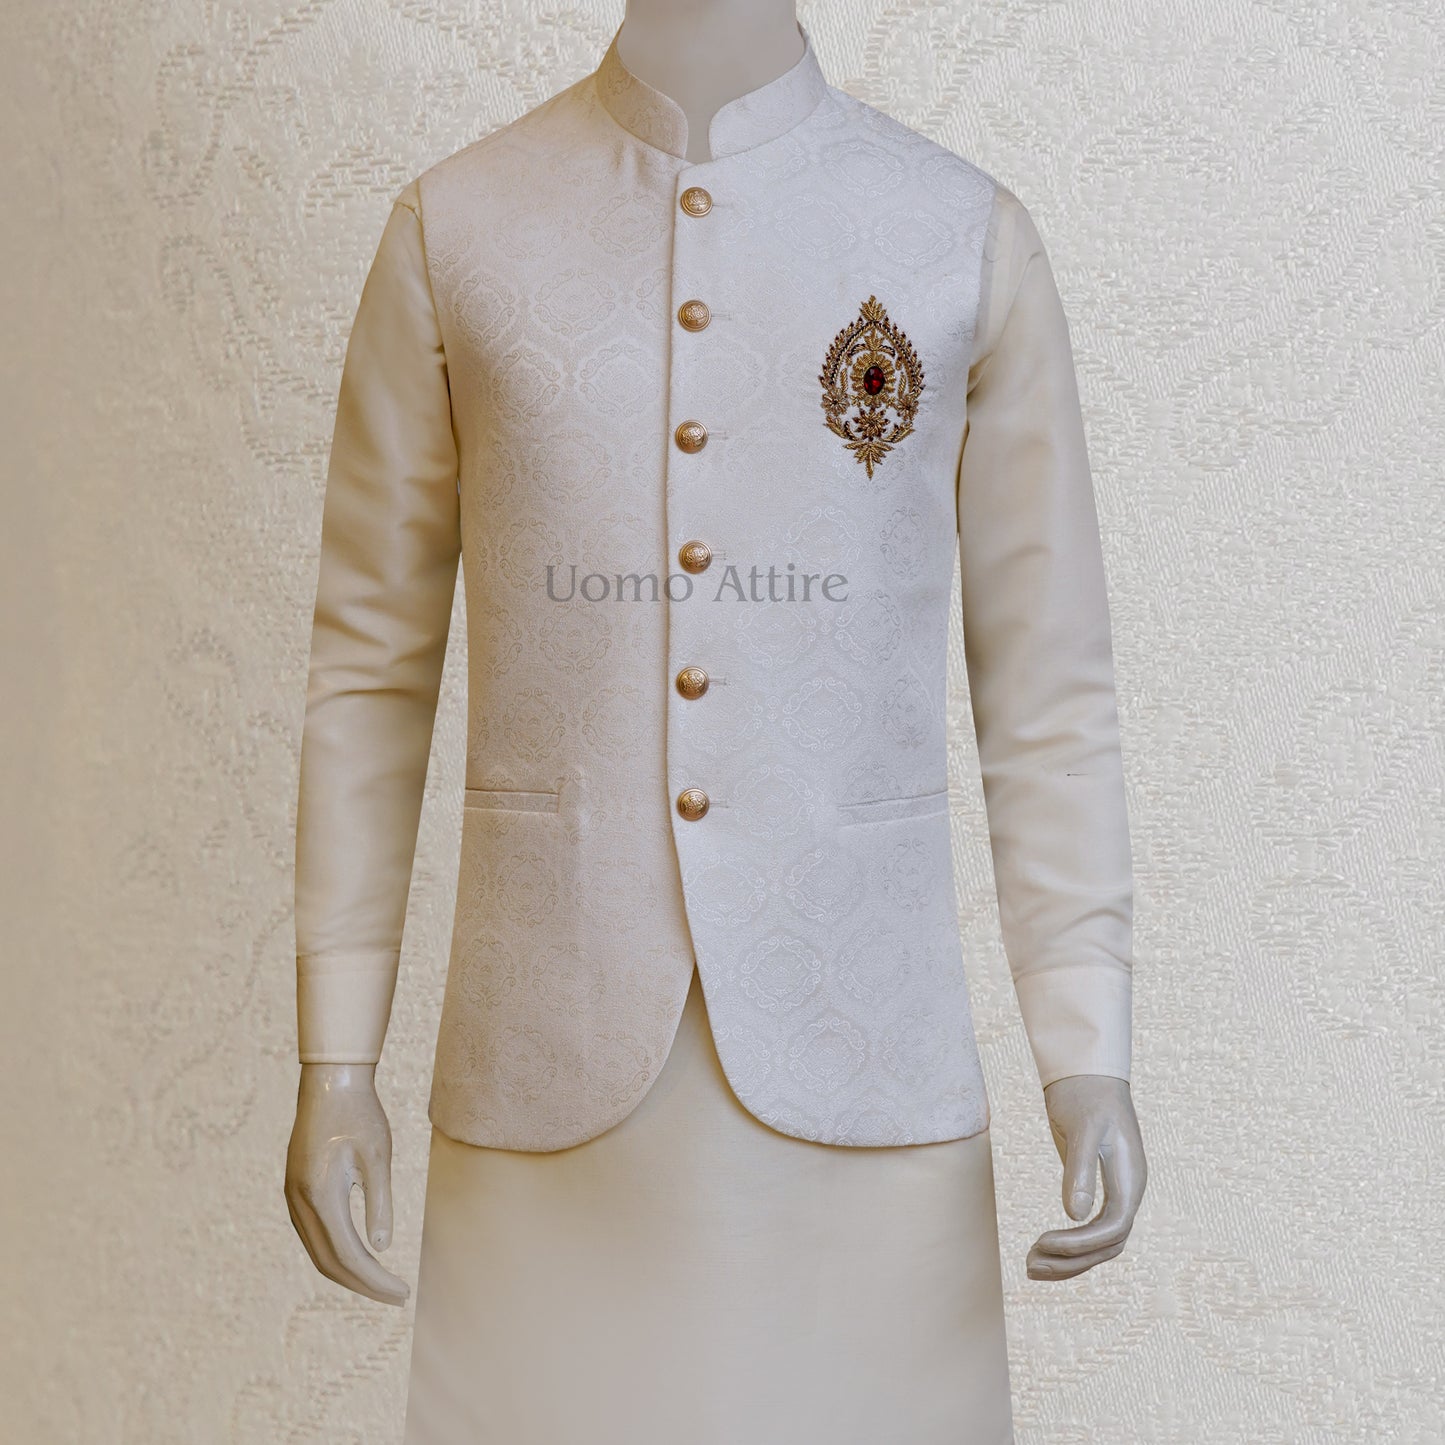 Uomo Attire's luxury custom-made waistcoat for men